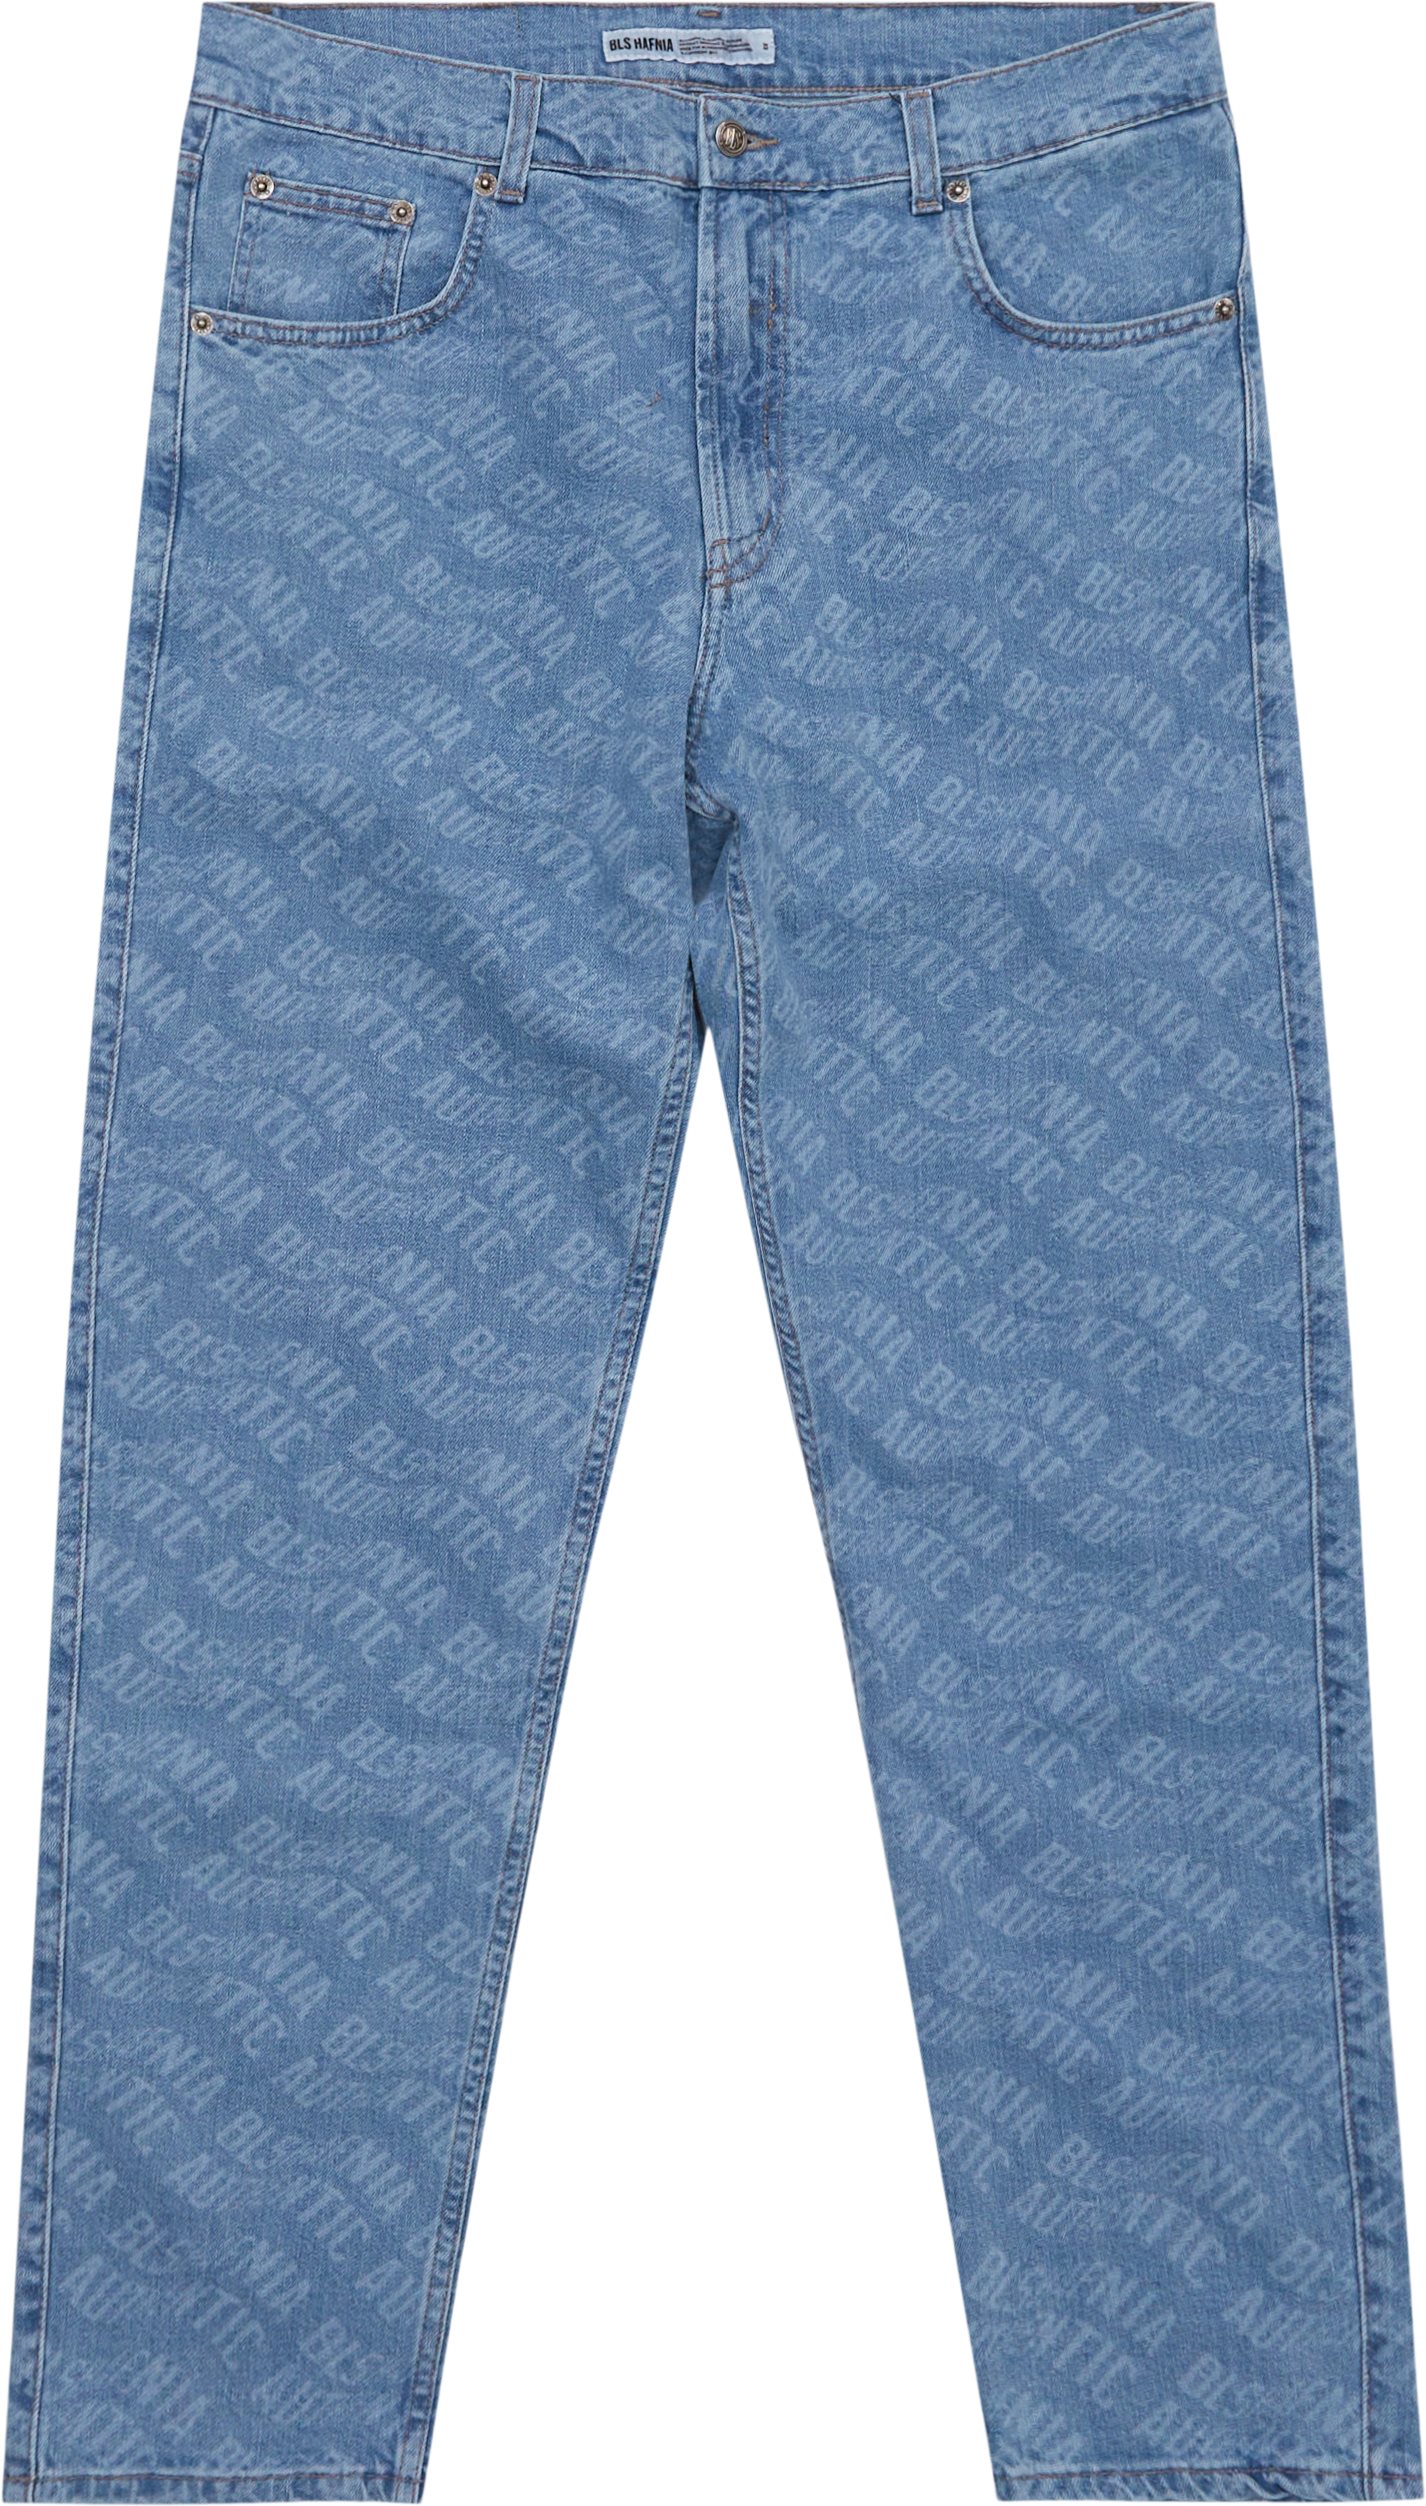 WAVY JEANS 202303034 Jeans DENIM fra BLS 699 DKK